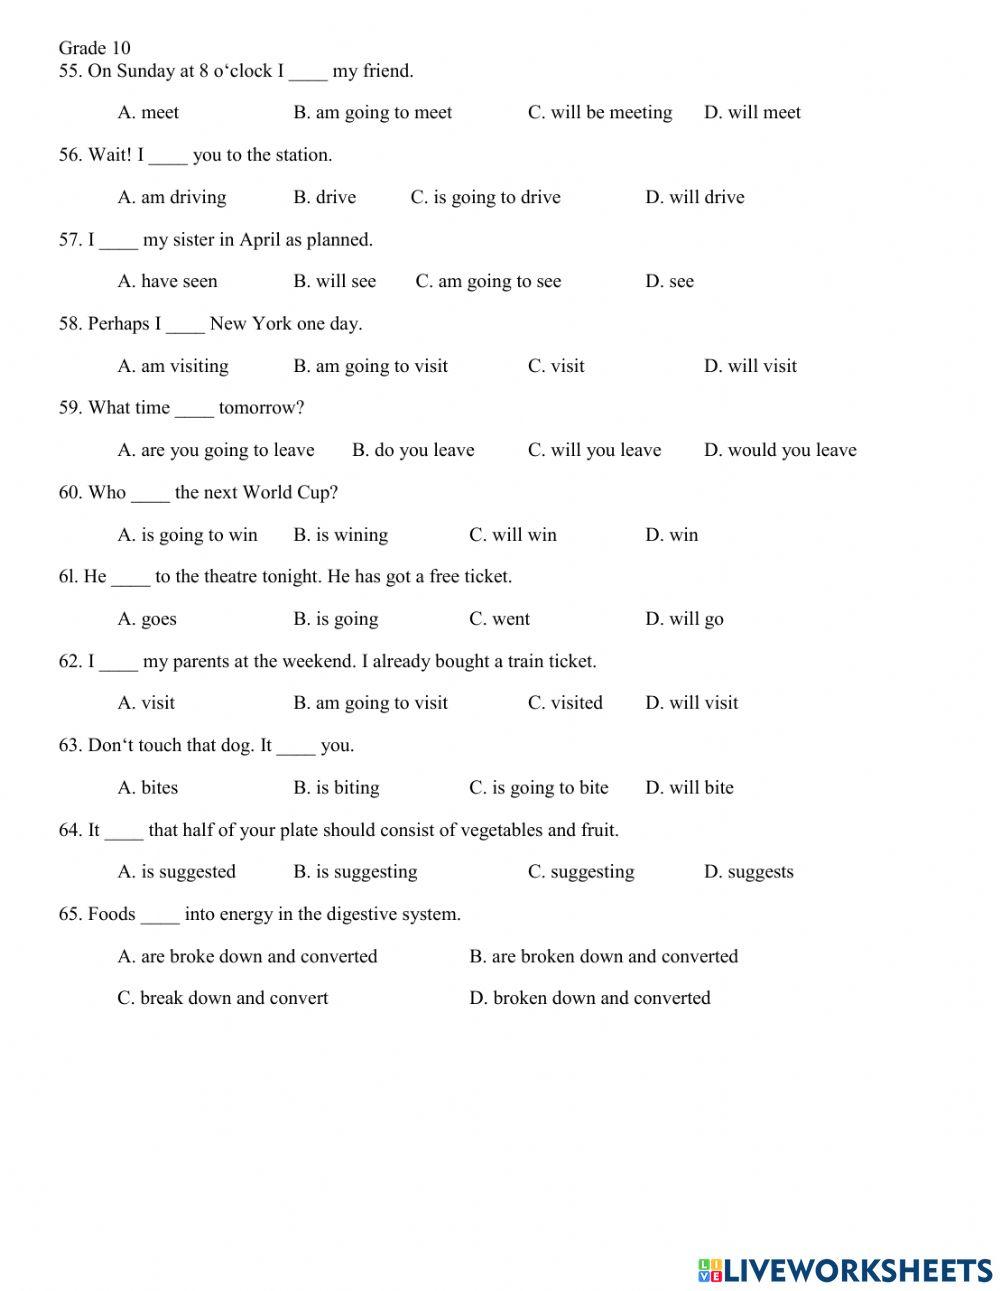 Test for unit 2-grade 10 (thí điểm)